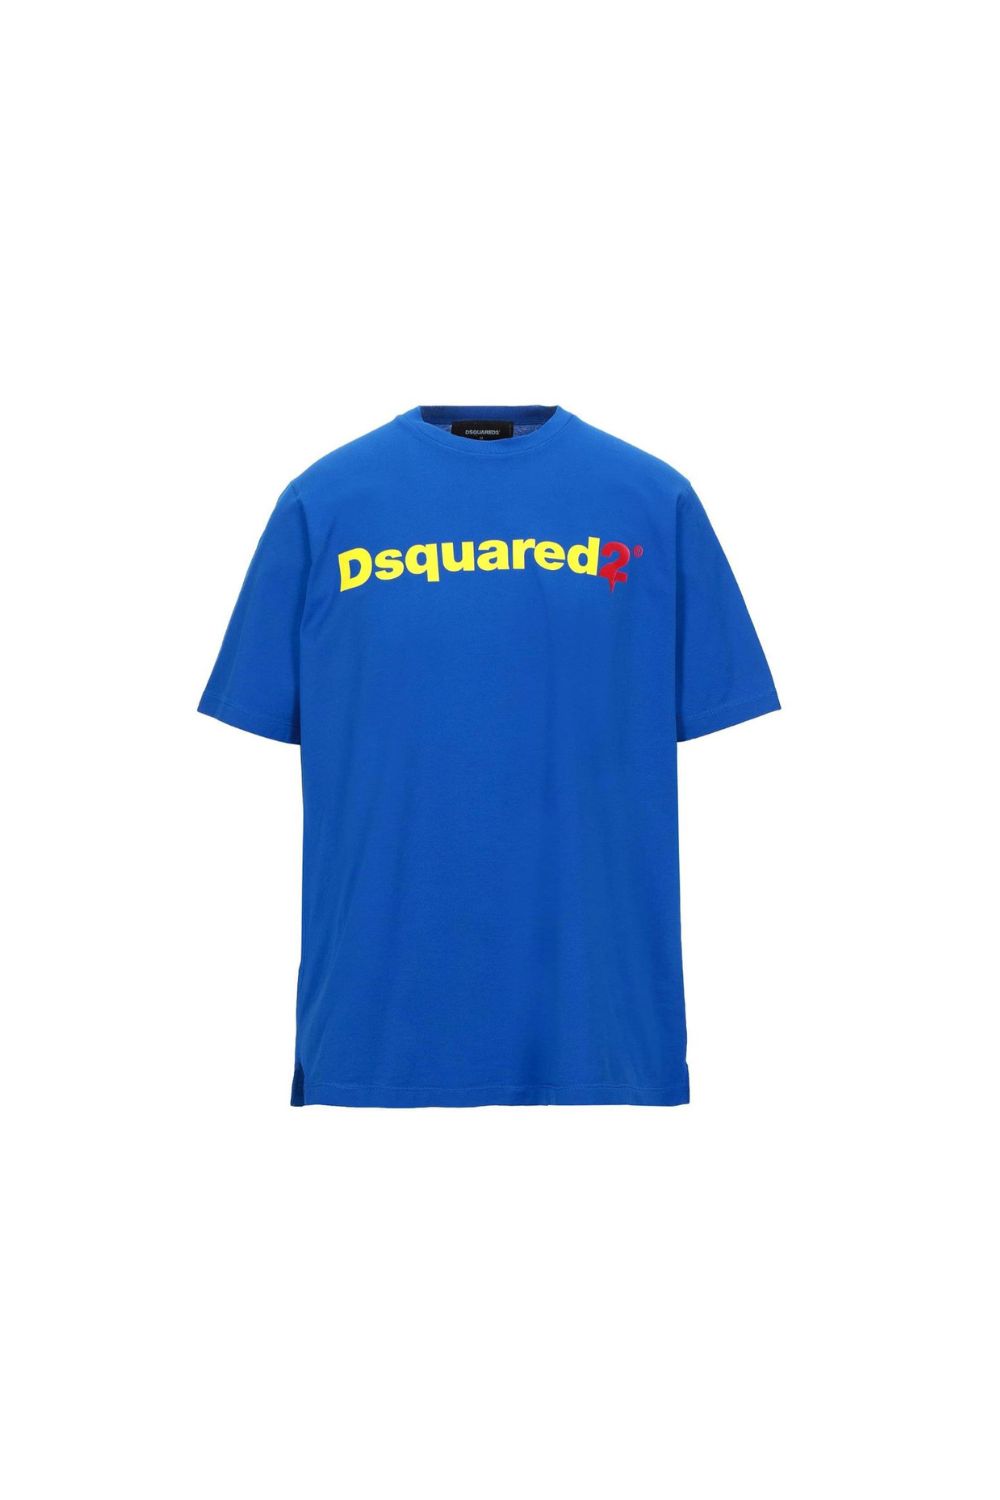 Dsquared2 t shirt con logo